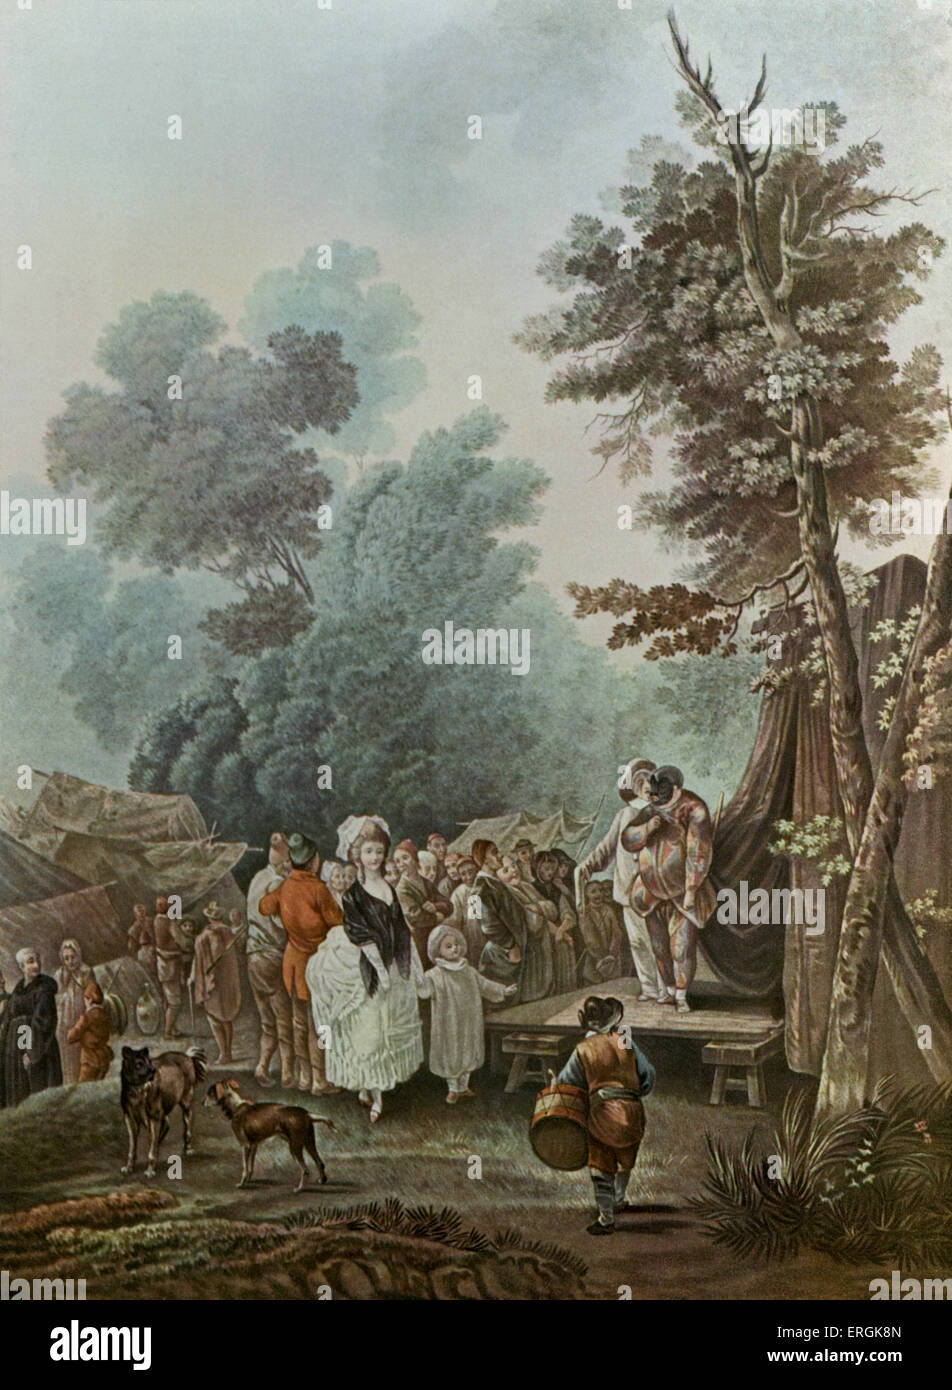 La Foire de Village (The Village Fair), 1785 - after engraving by Charles Melchior Descourtis, after Nicolas Antoine Taunay Stock Photo